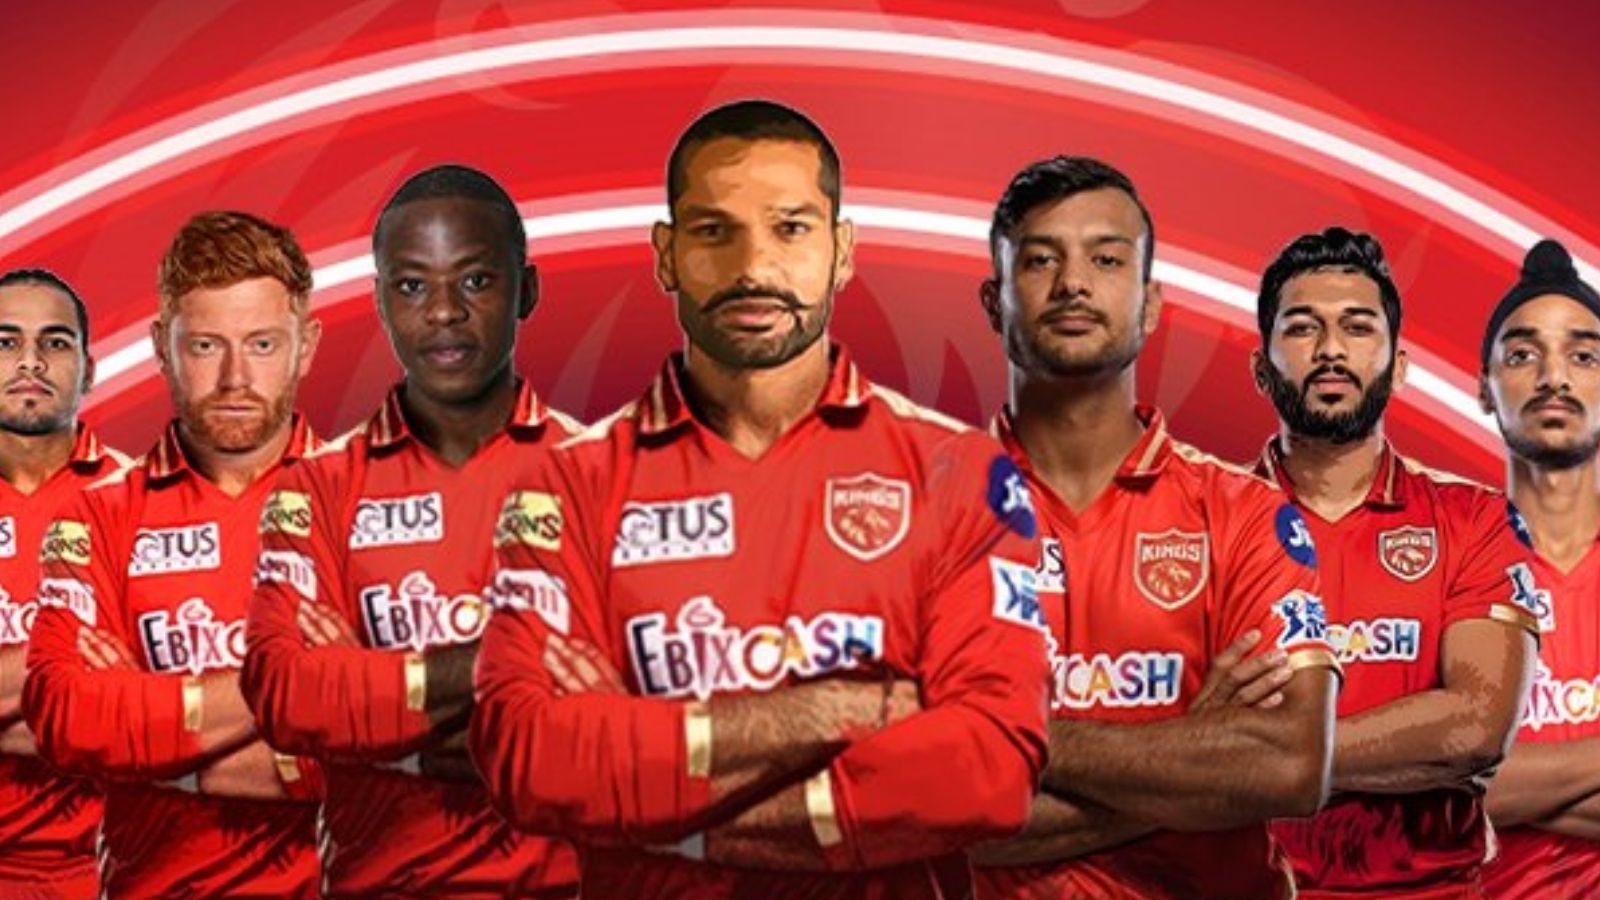 Top Five Players of Punjab Kings in IPL